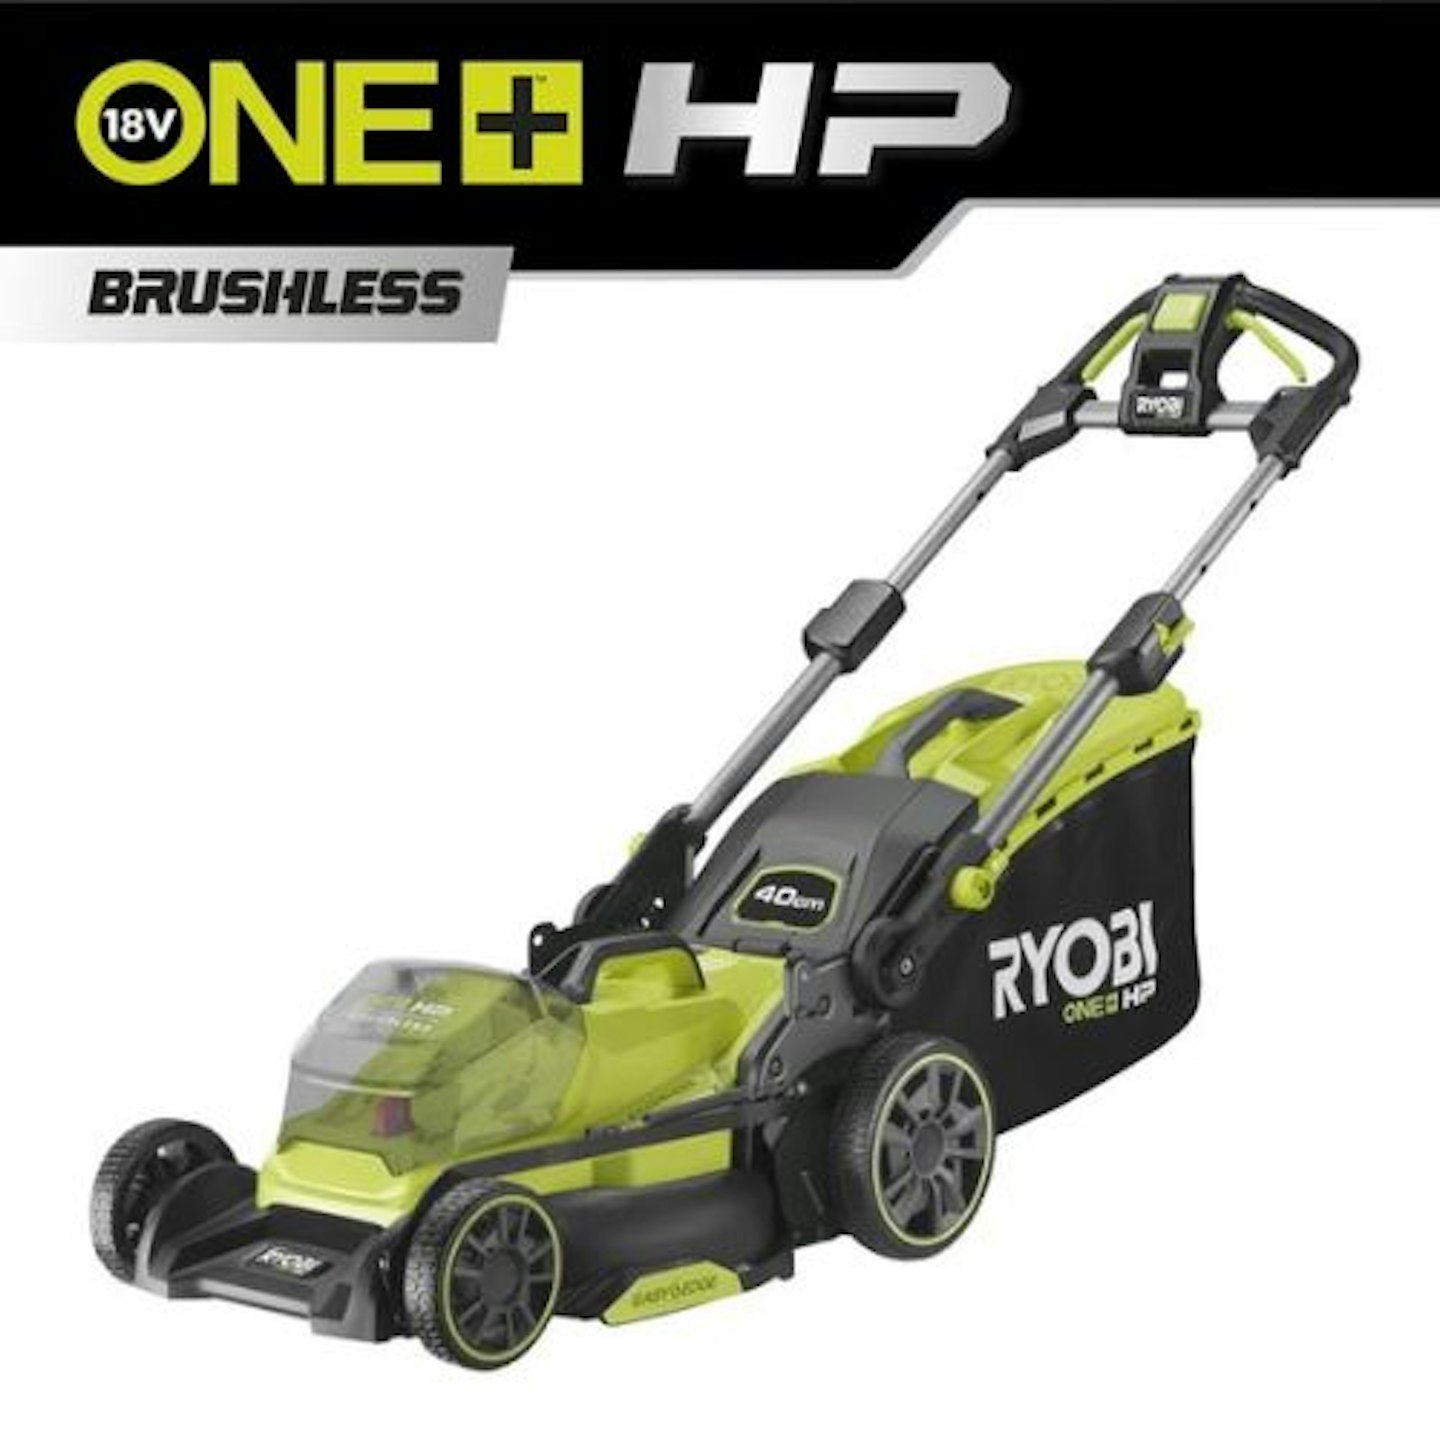 Ryobi 18V ONE+ HP Cordless Brushless 40cm Lawn Mower